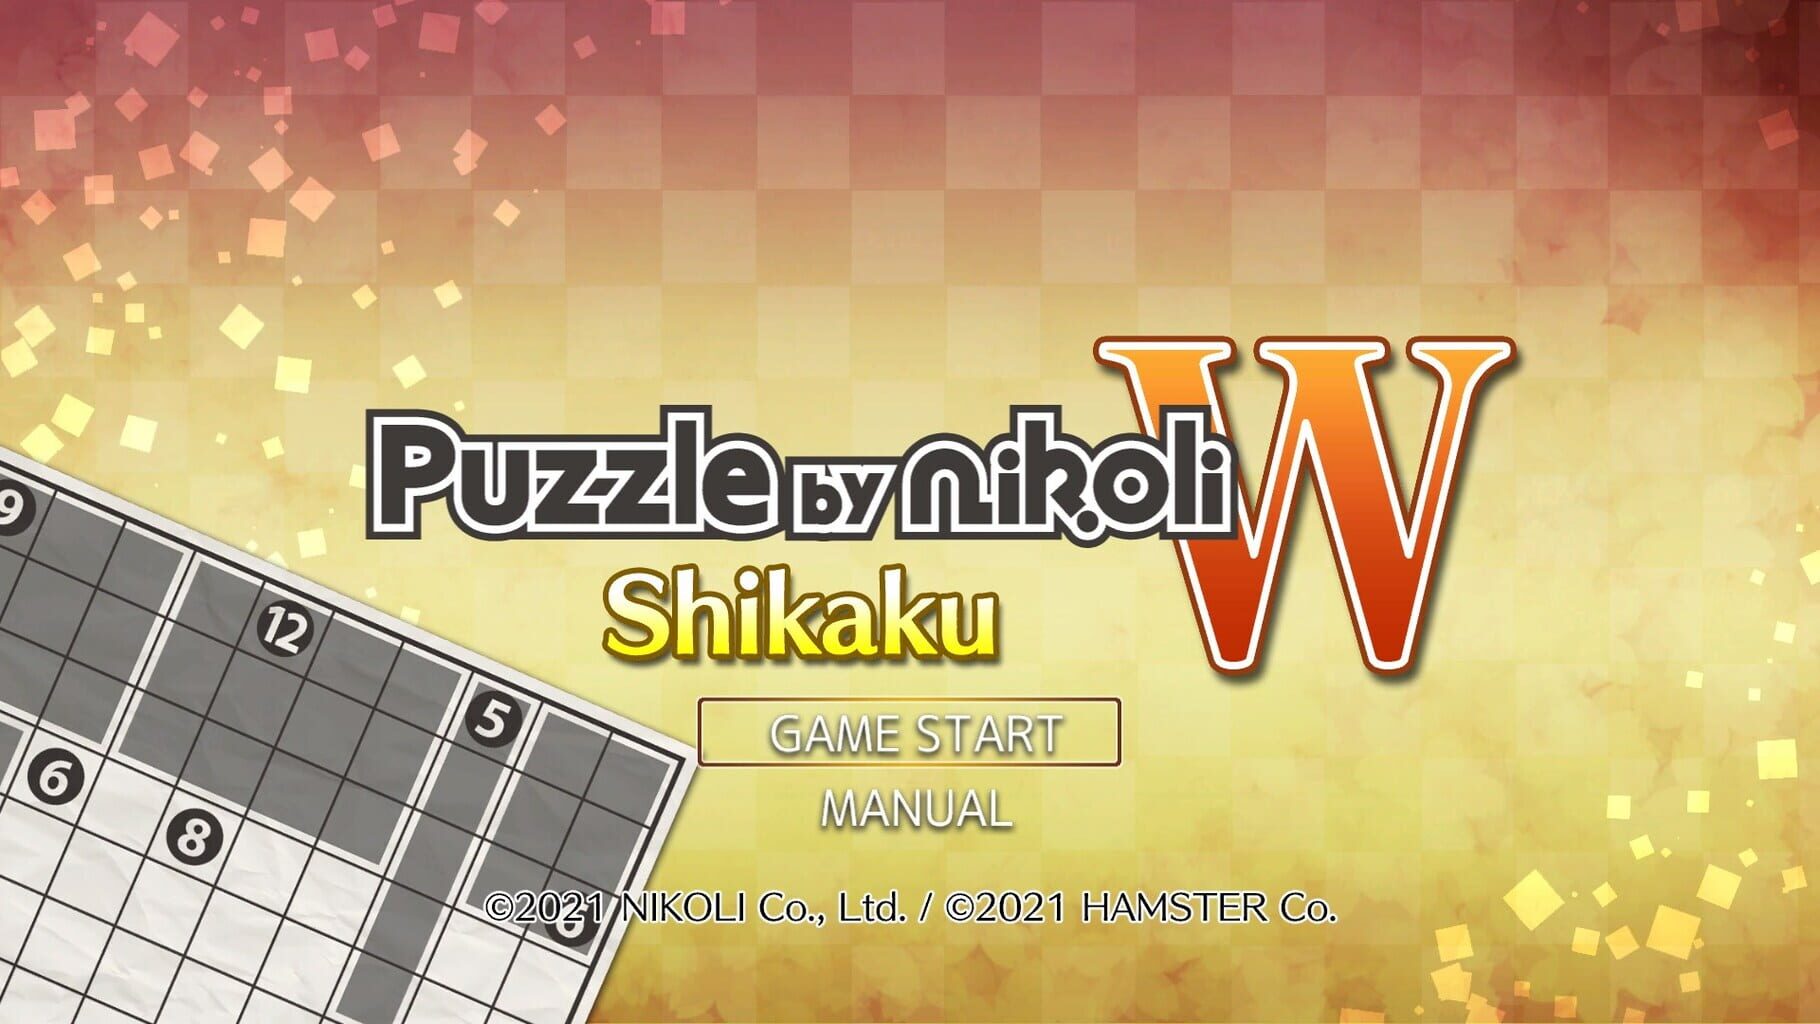 Captura de pantalla - Puzzle by Nikoli W Shikaku